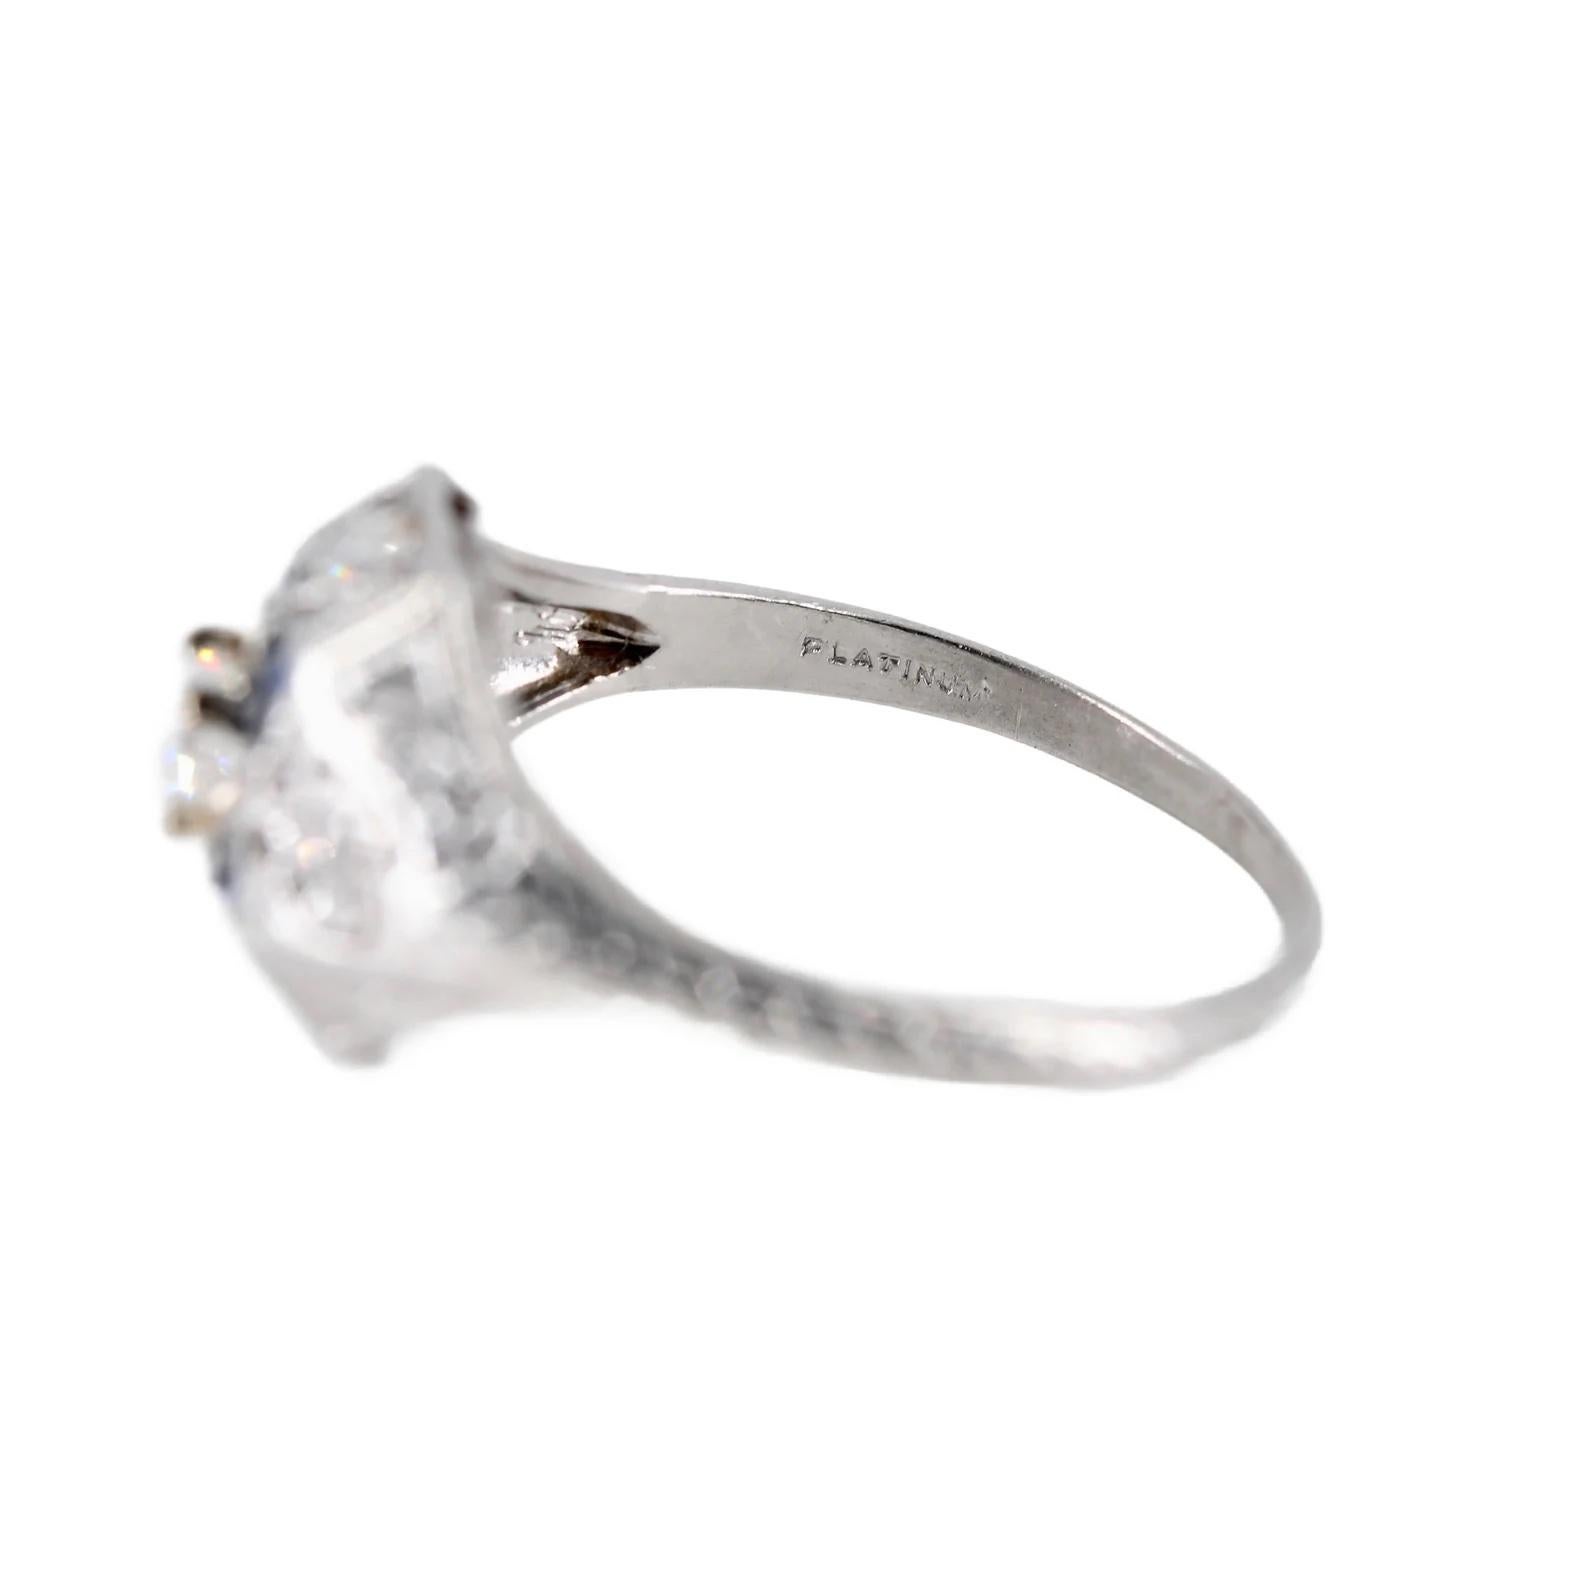 Charming Art Deco Diamond, & Sapphire Engagement Ring in Platinum Circa 1920's For Sale 1